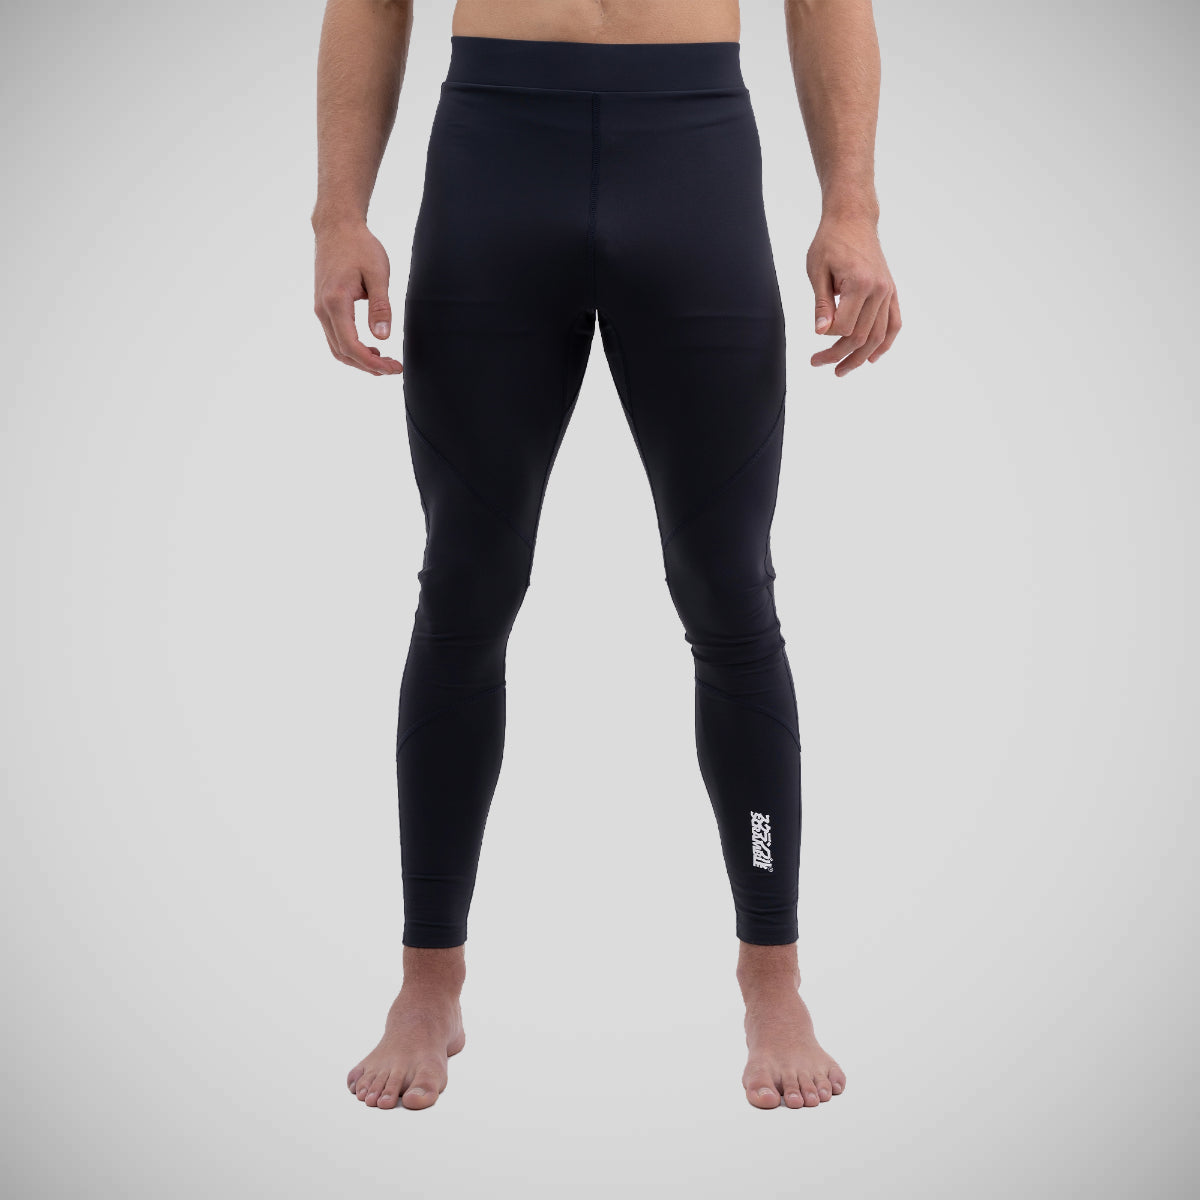 Supply & Demand Spats Leggings - Black (Yoga BJJ Martial Arts MMA Training  Fitness Wear Black Hiking Jogging Attire Pilates HIIT Gym) jd sports ,  Women's Fashion, Bottoms, Jeans & Leggings on Carousell